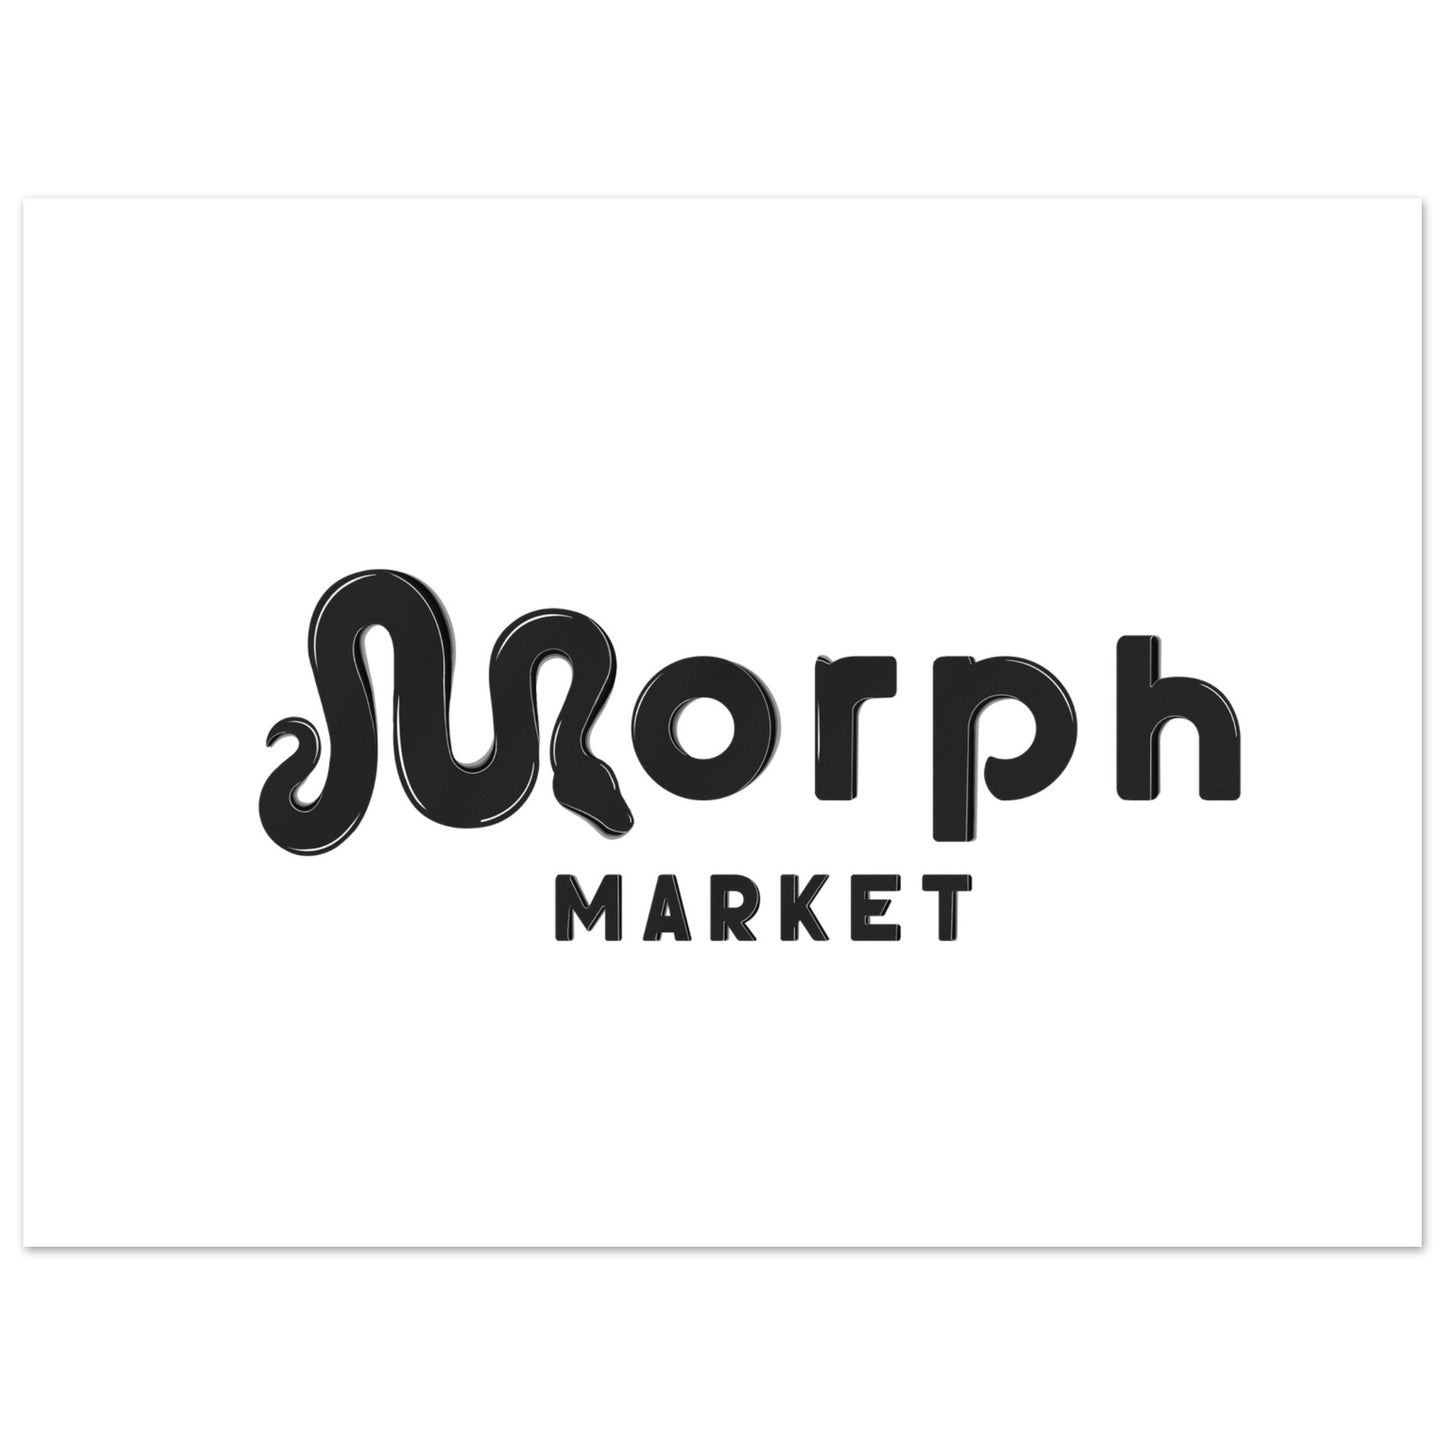 Morph Market (Dark) - Premium Matte Paper Poster